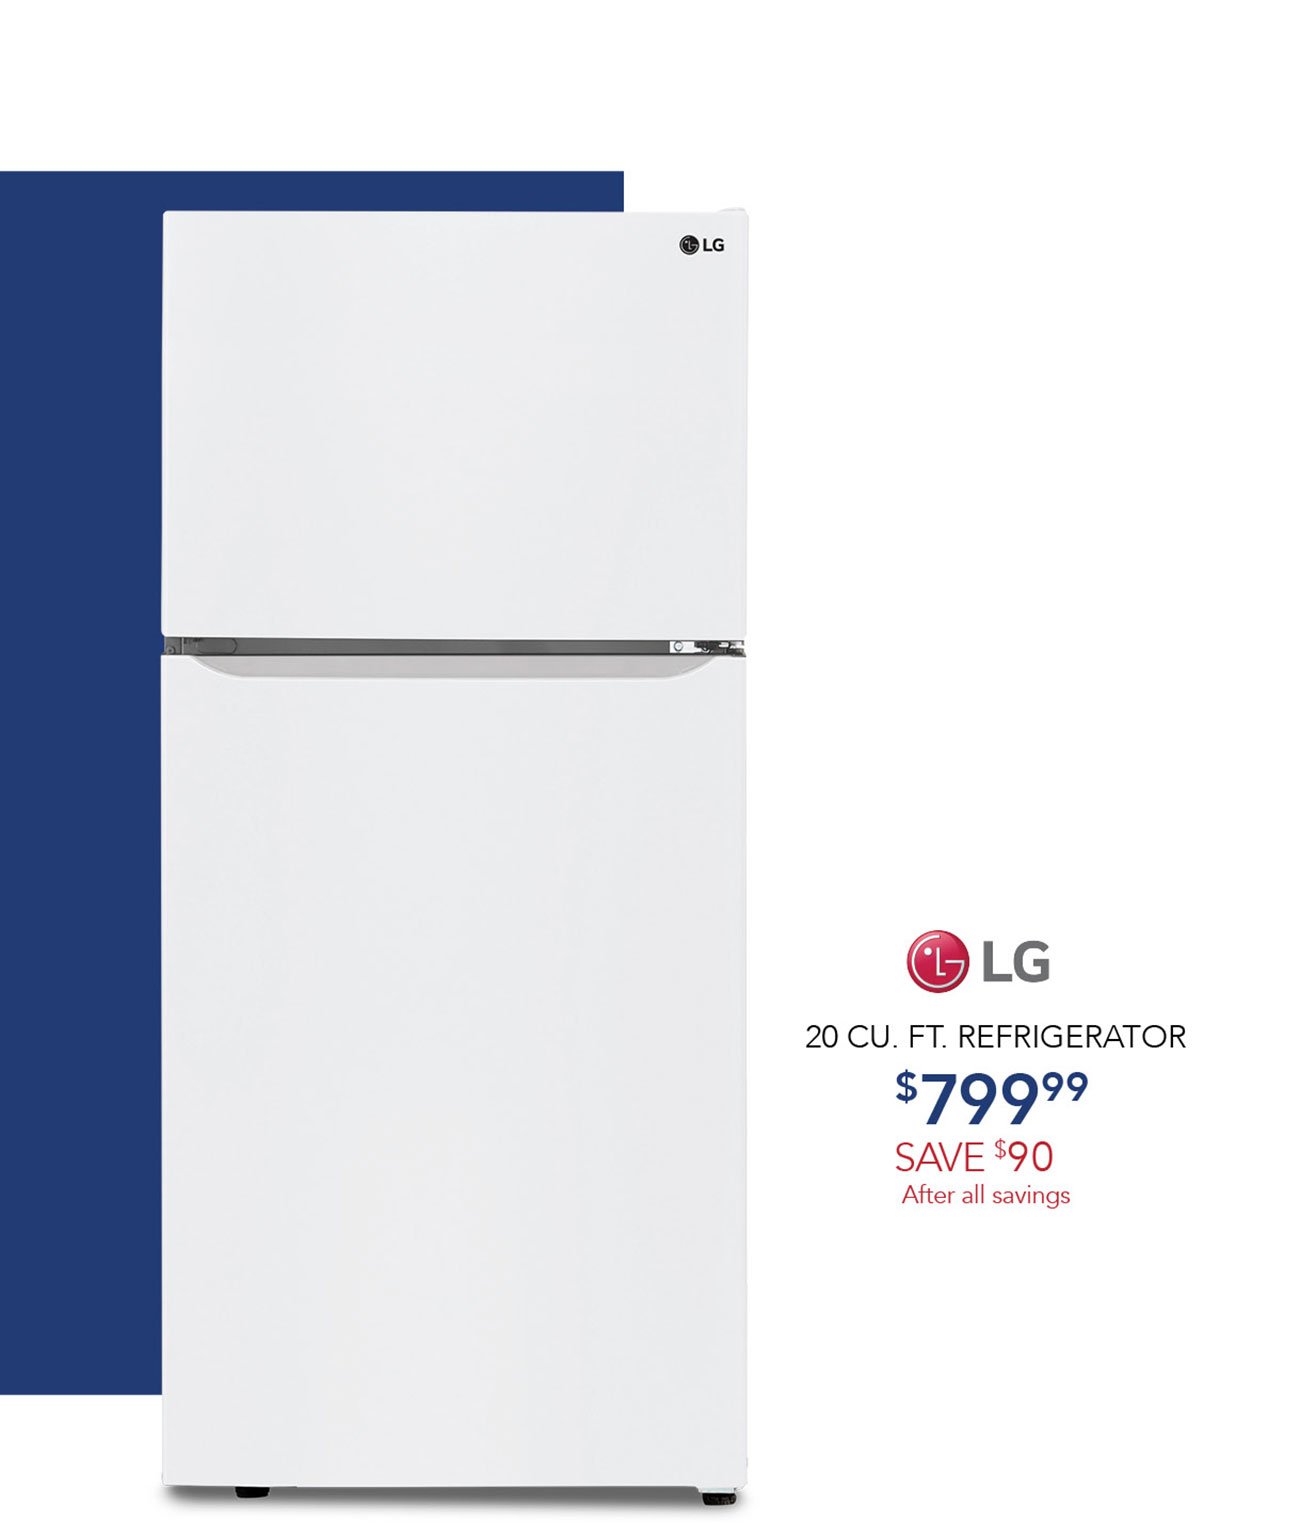 LG-refrigerator